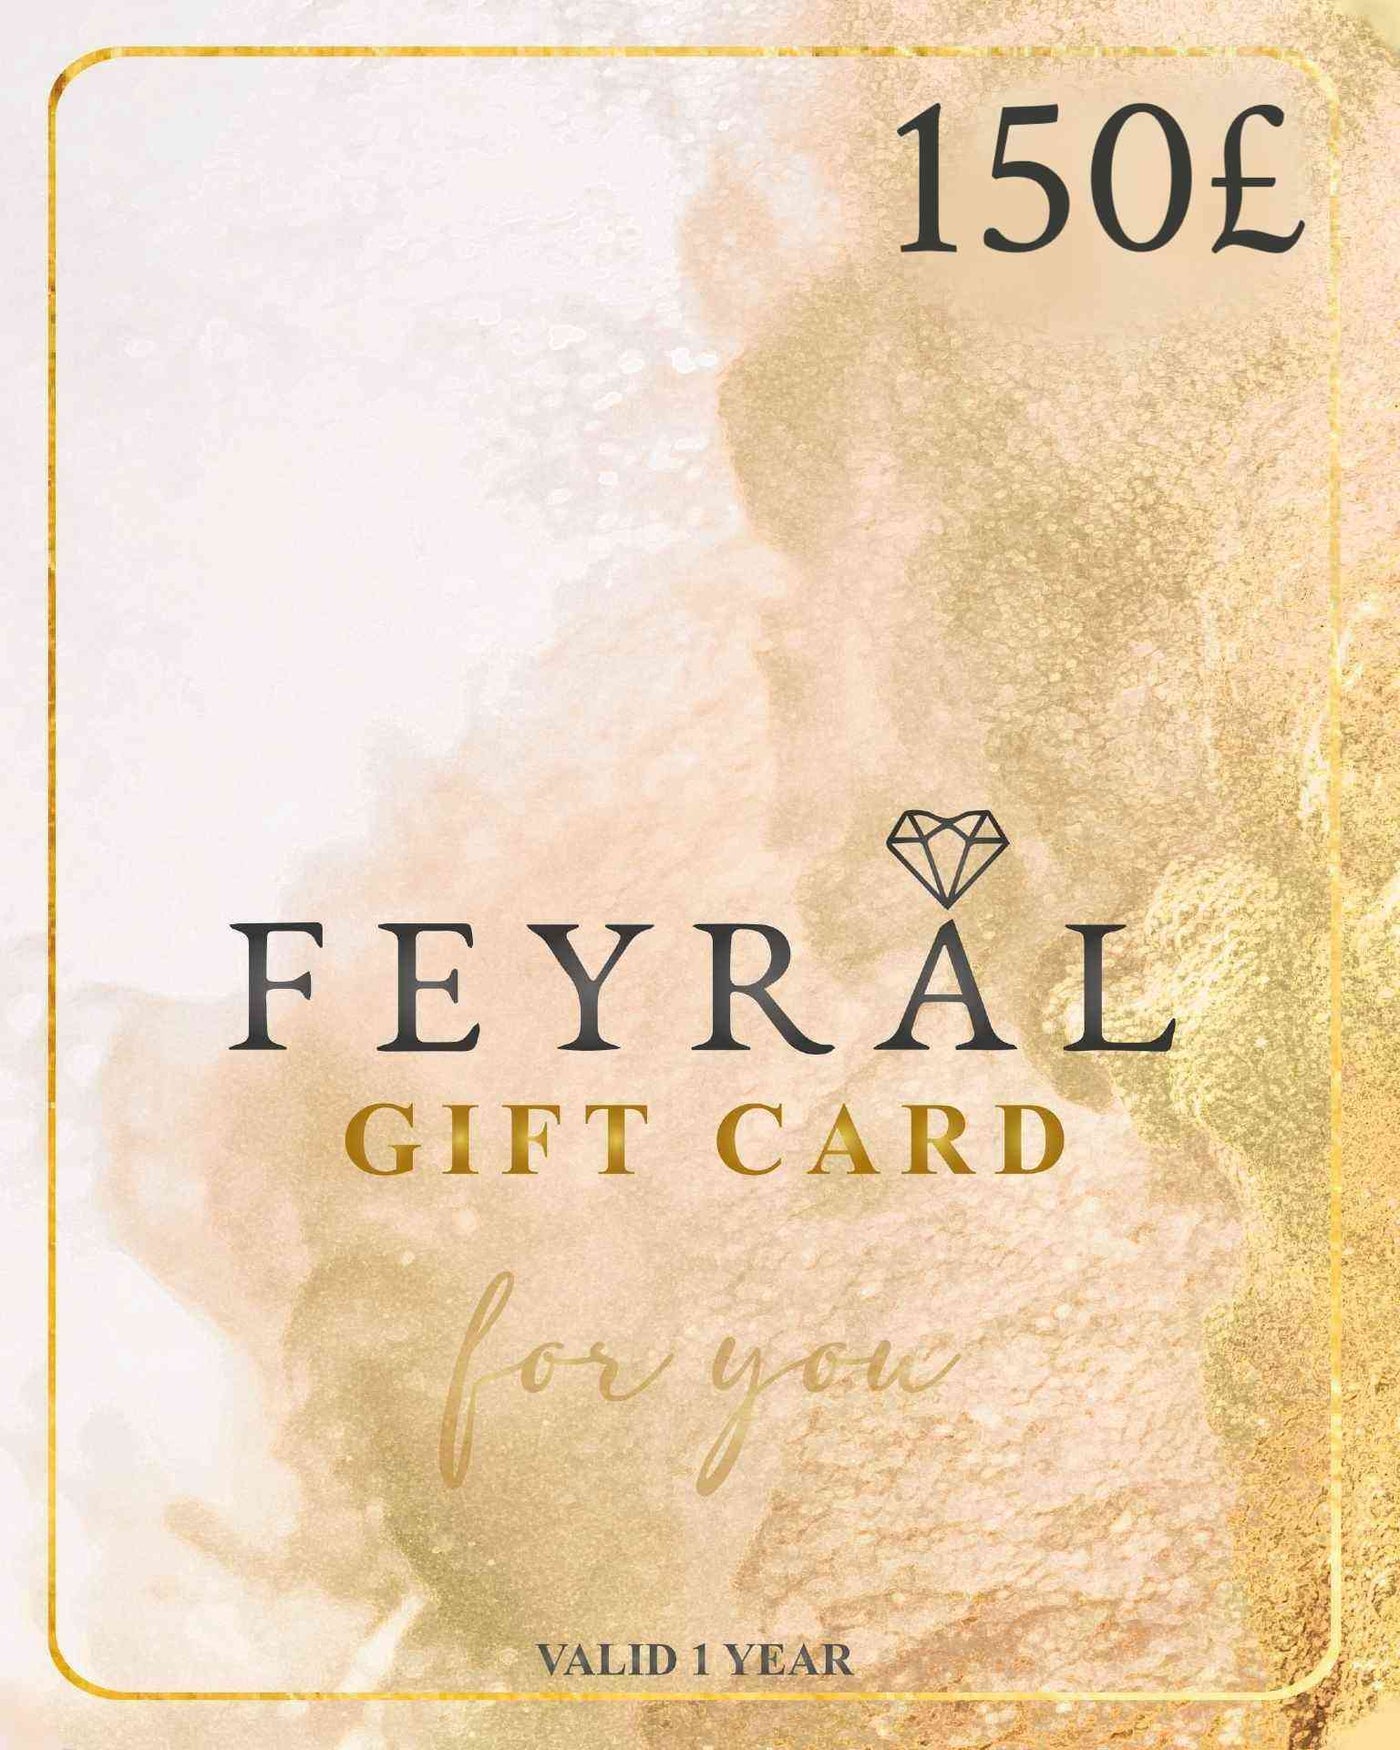 Gift Card | 150£